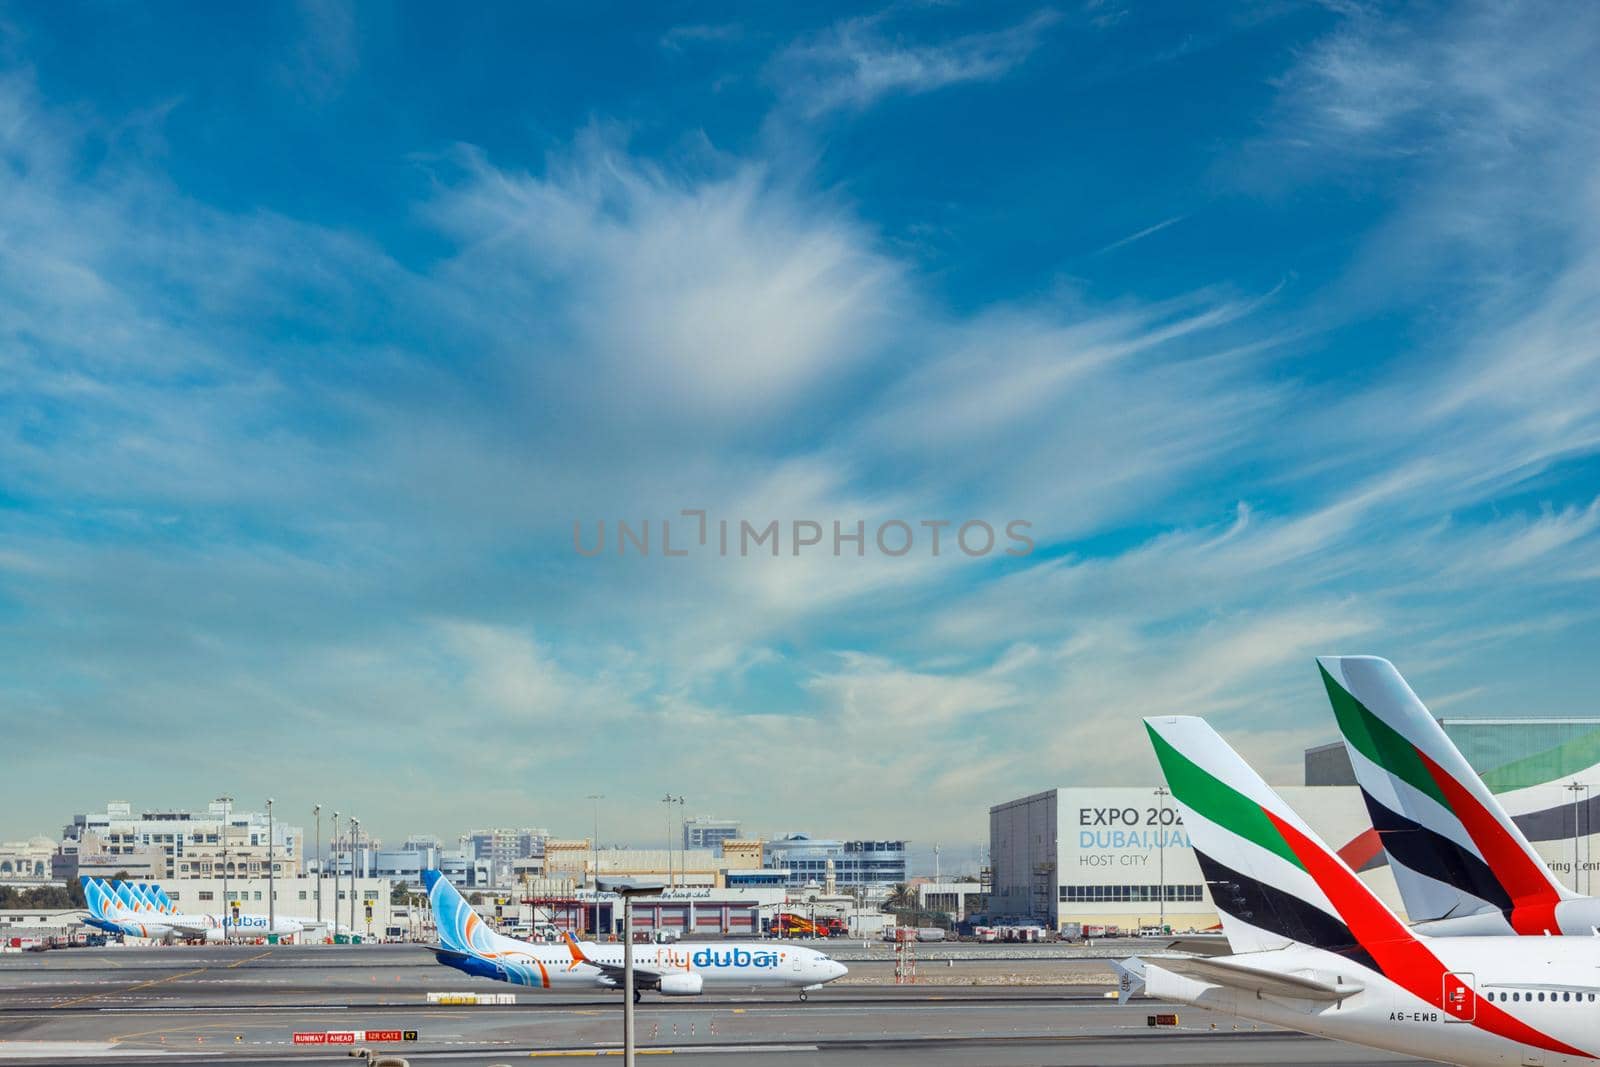 DUBAI, UAE - CIRCA 2021: DUBAI, UAE - CIRCA 2021: Emirates Airline and FlyDubai Airline Airplanes parked on Dubai Airport, on cloudy sky background.